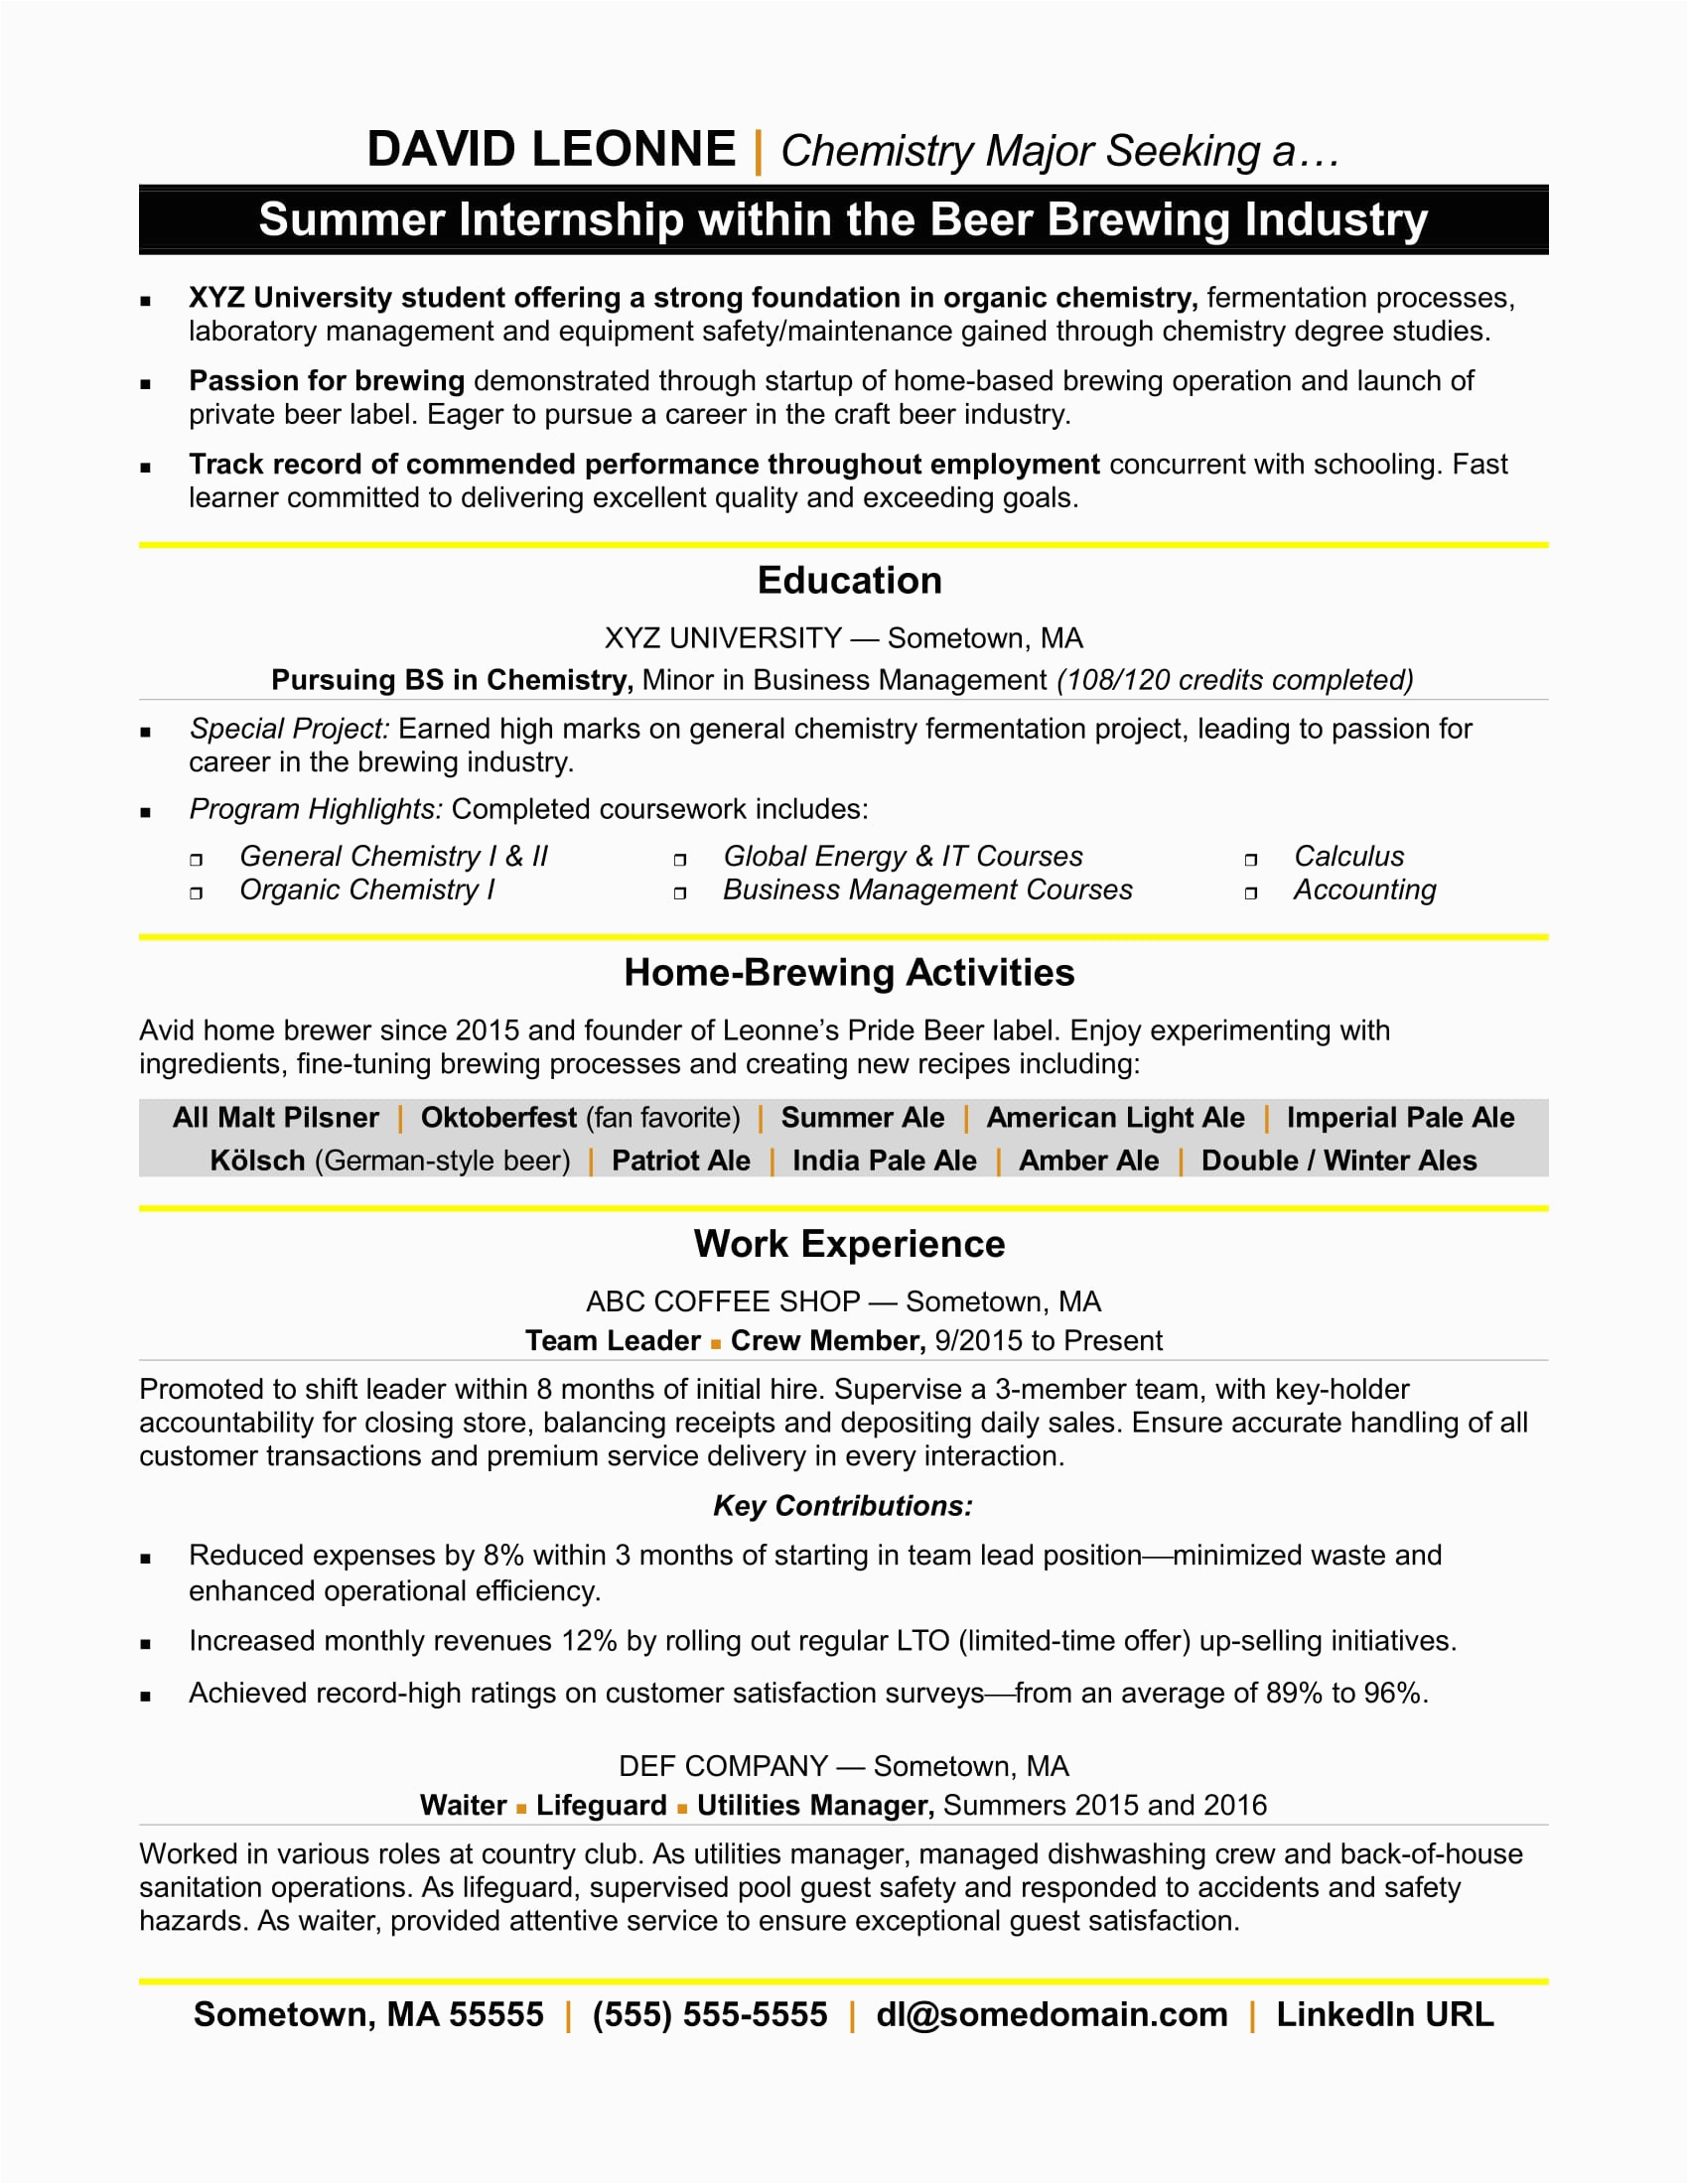 Sample Resume for Student Seeking Internship Resume for Internship